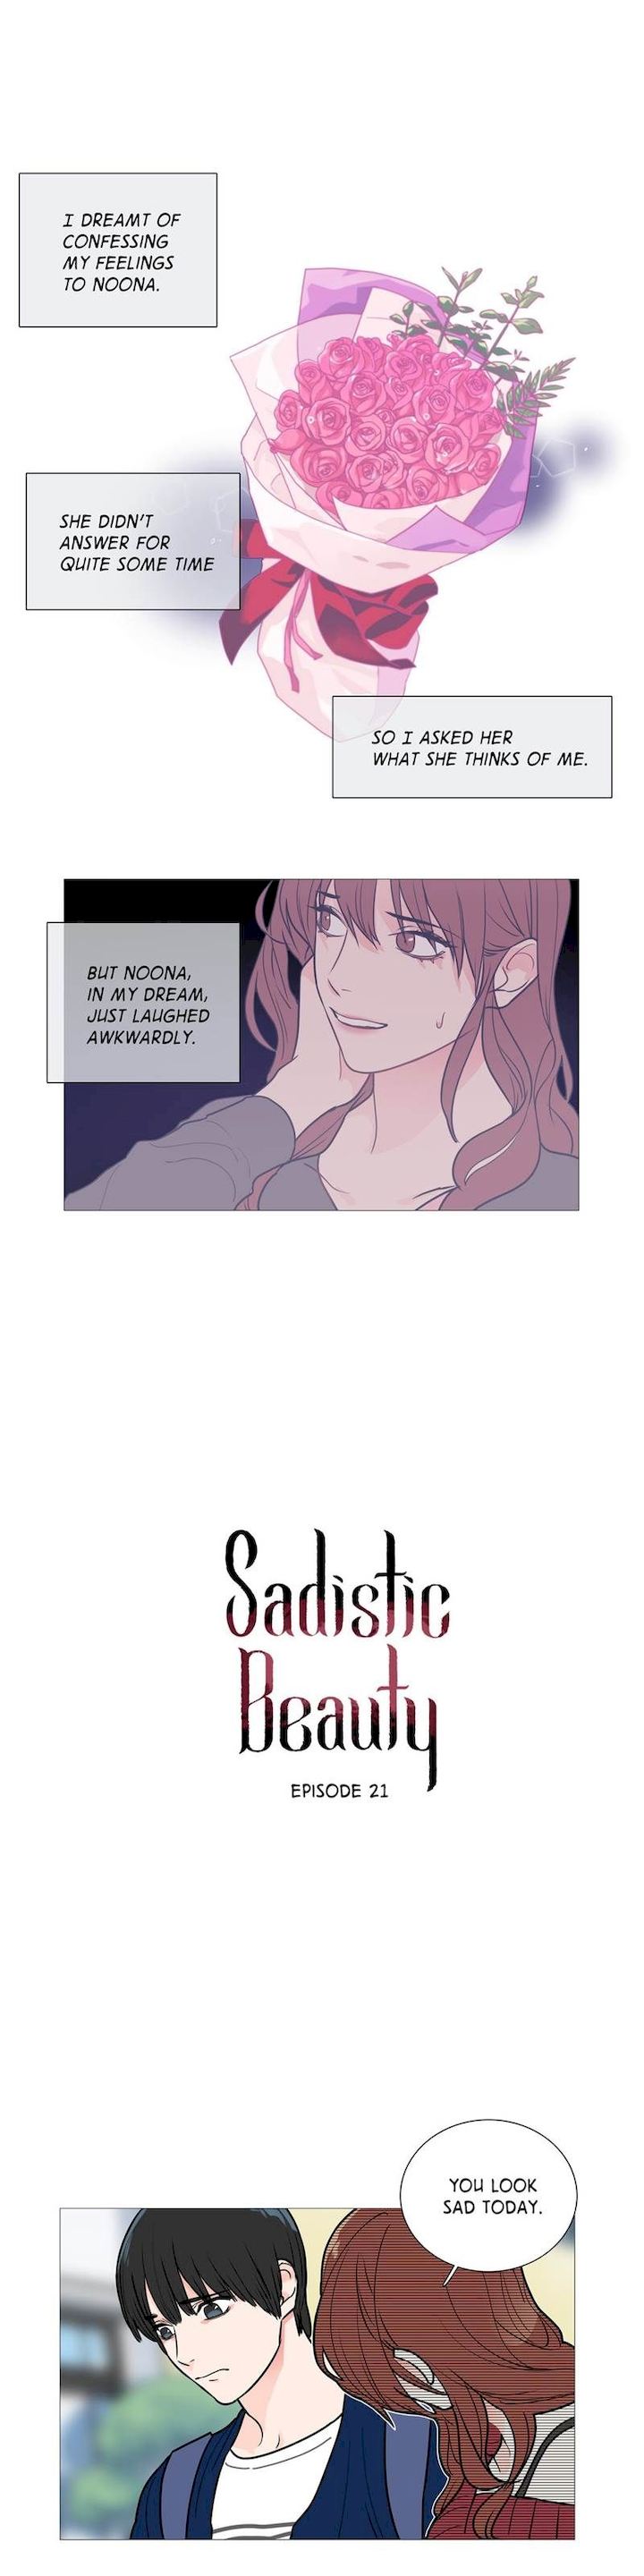 Sadistic Beauty Chapter 21 - Page 1